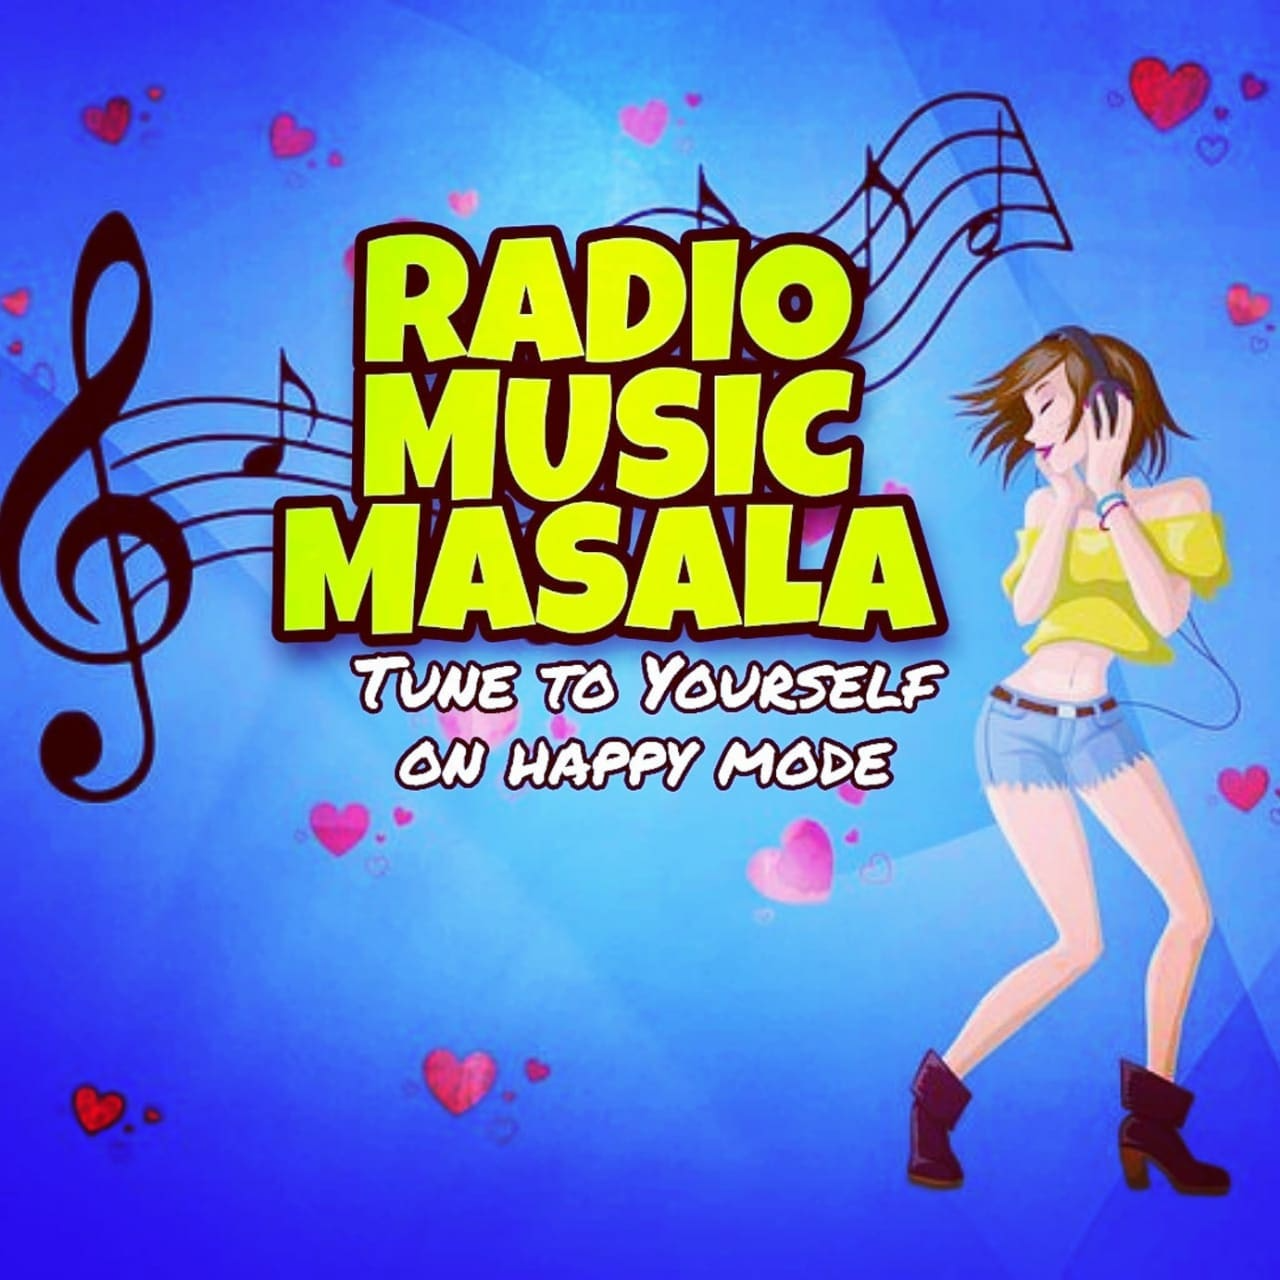 Radio Music masala